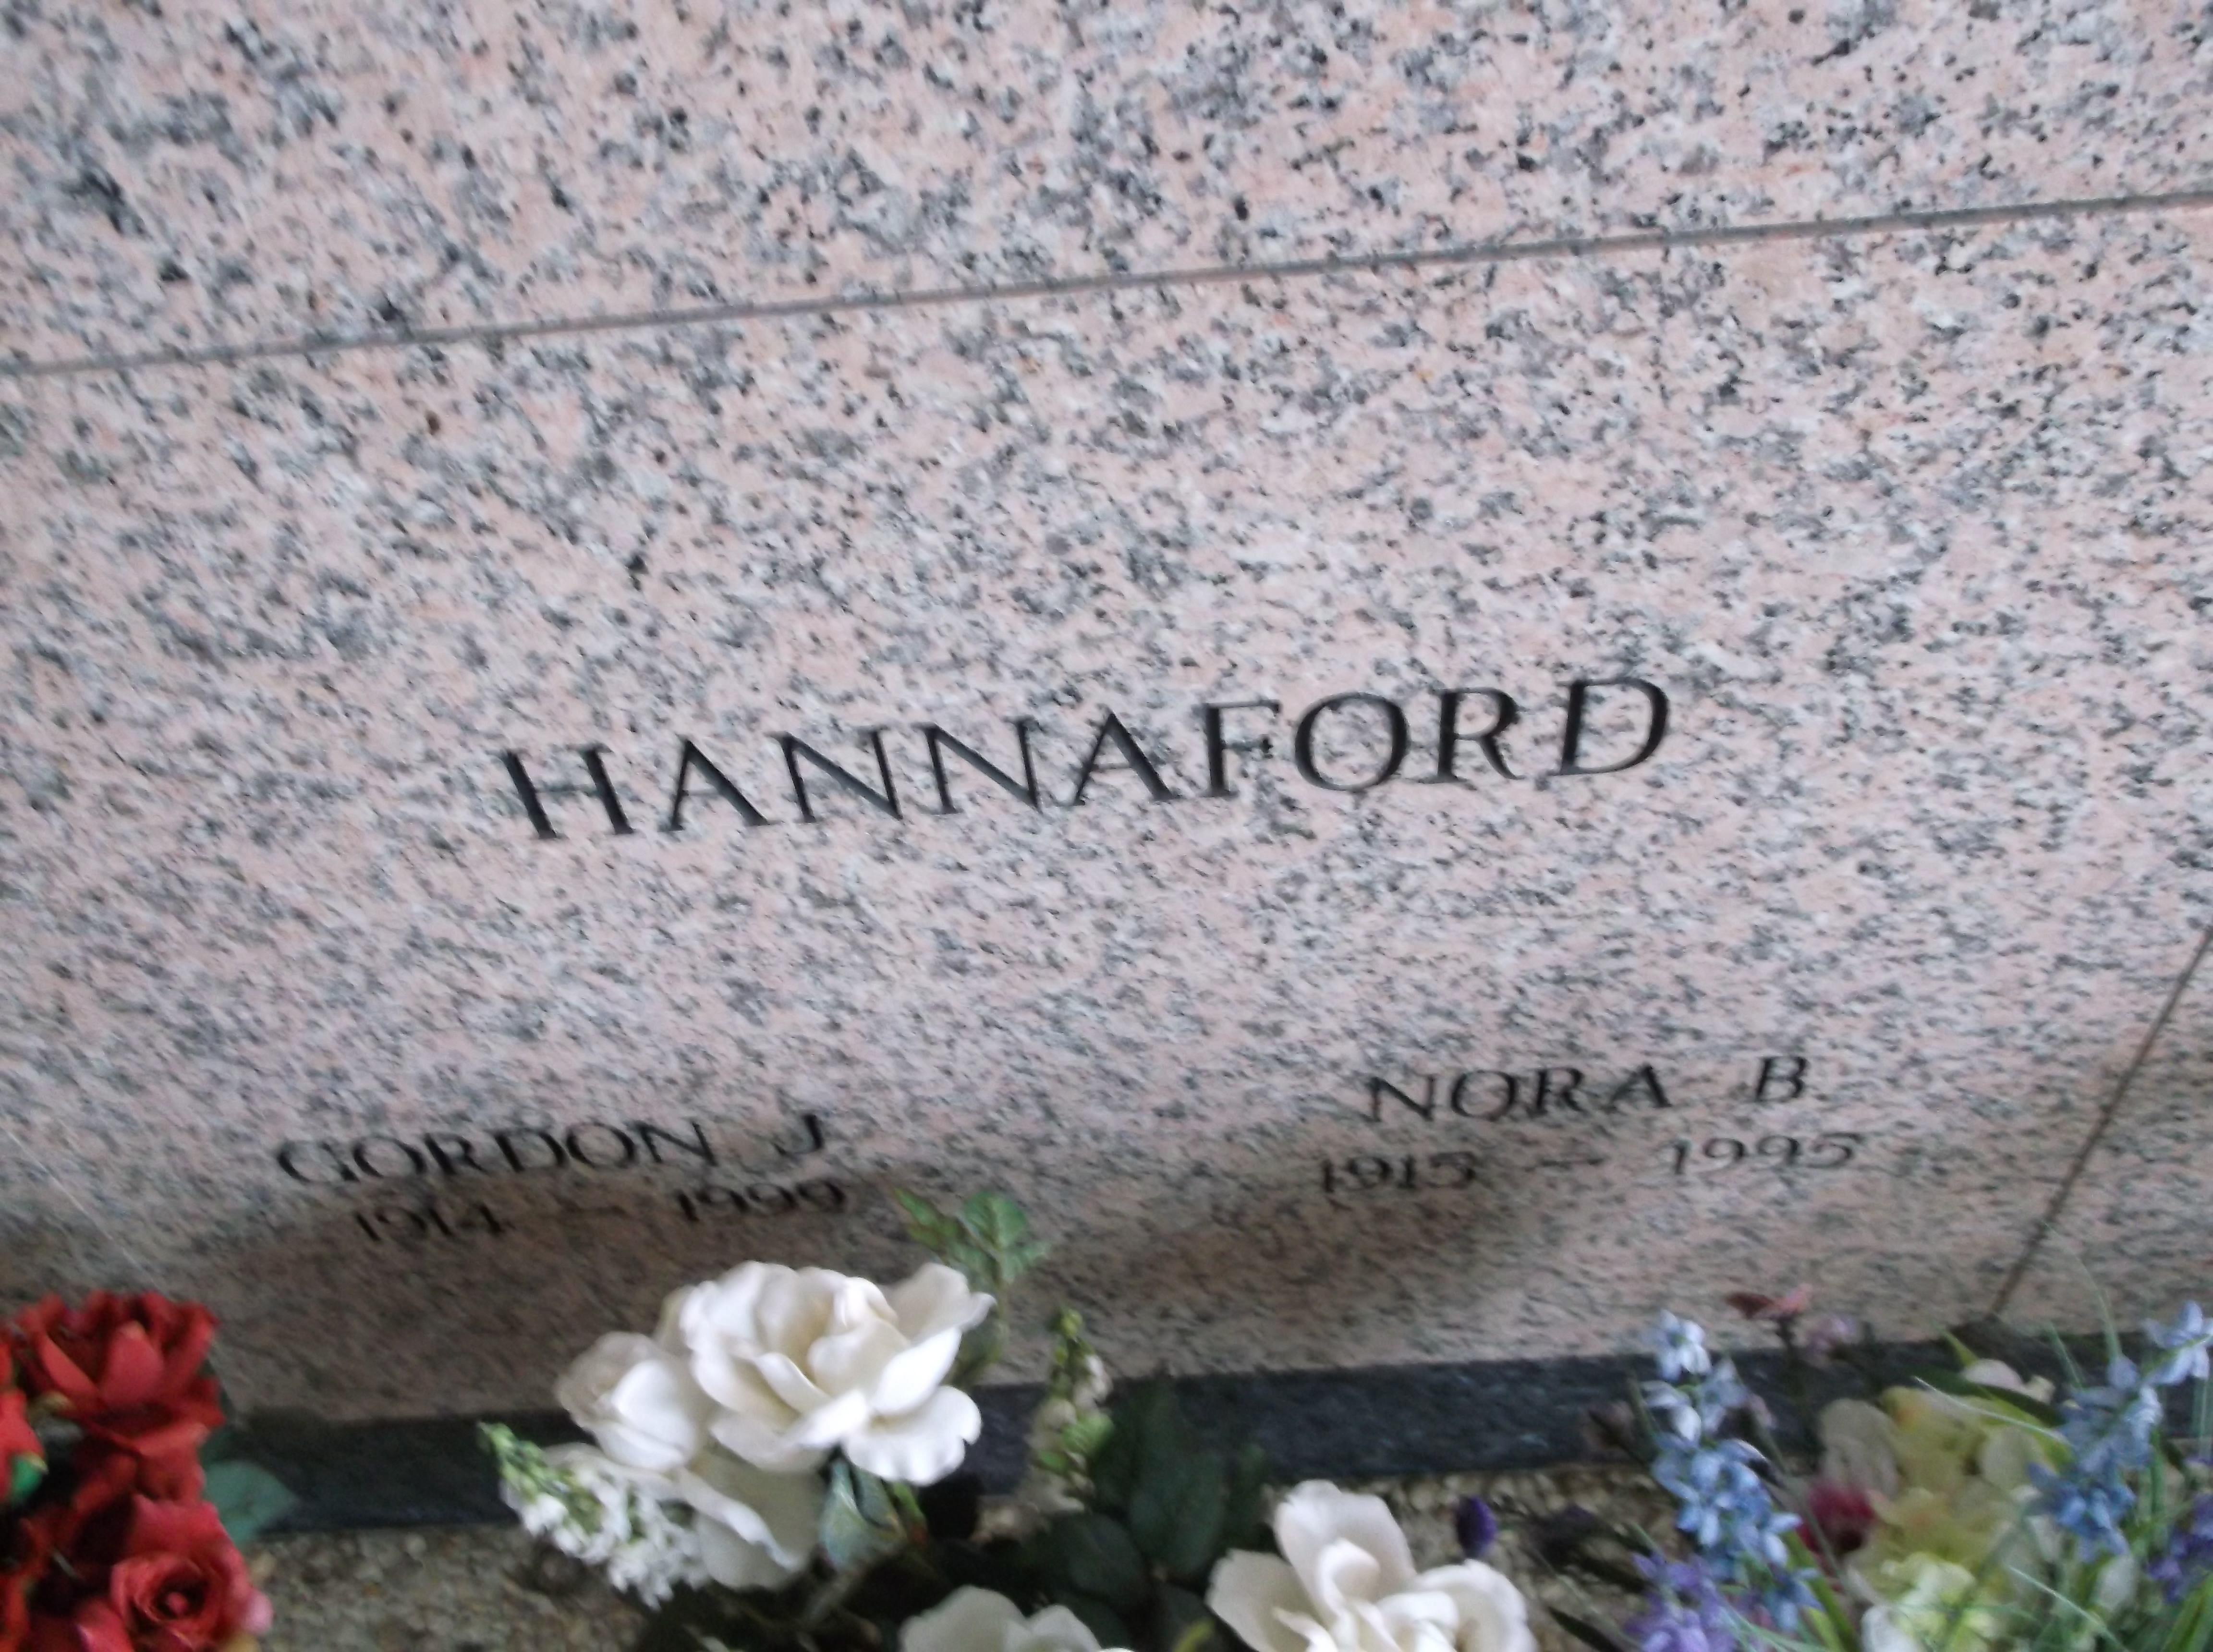 Nora B Hannaford